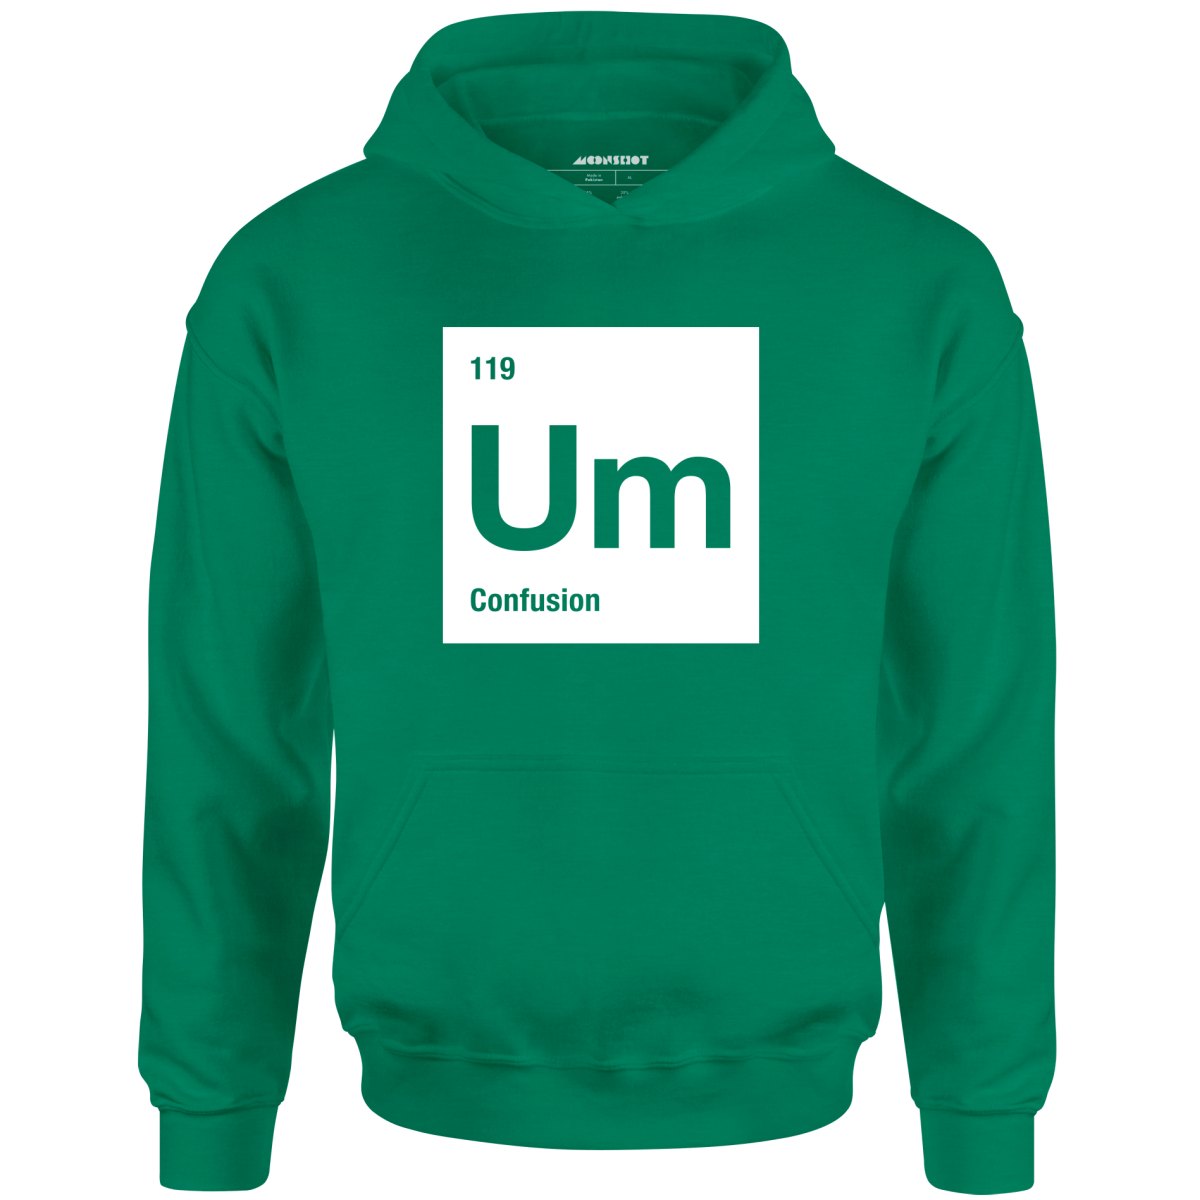 Um - The Element of Confusion - Unisex Hoodie